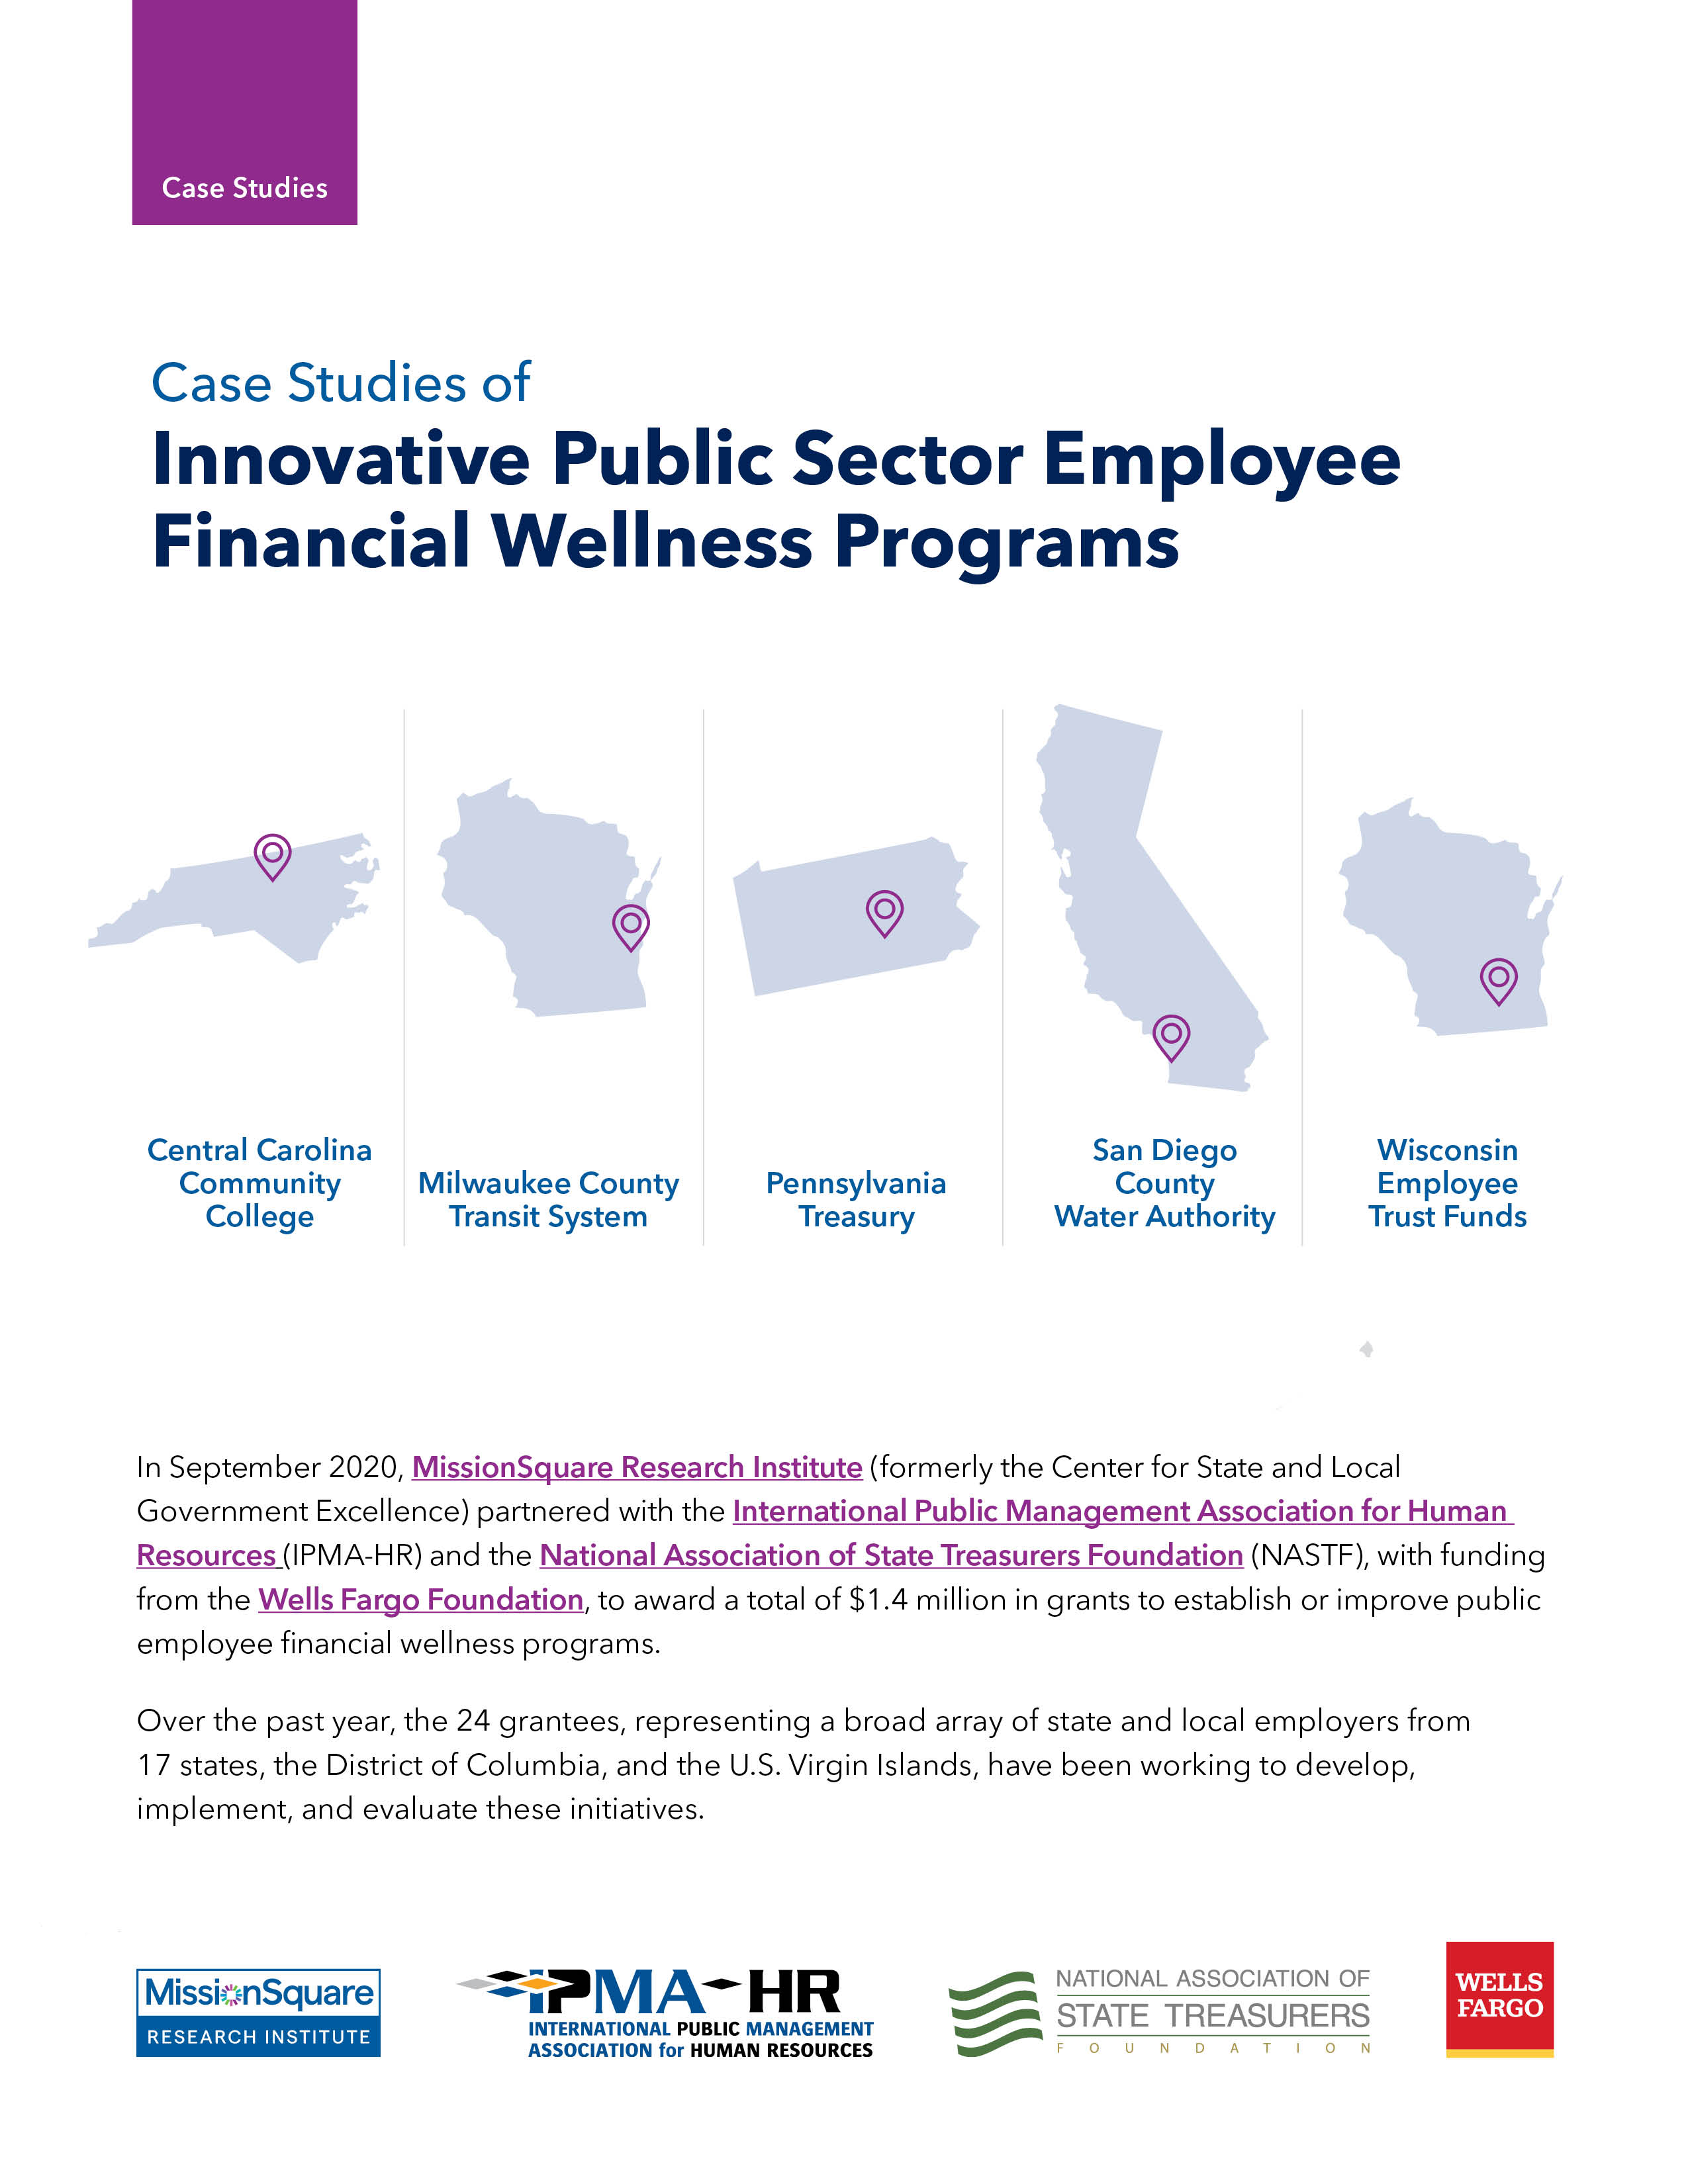 Case Studies of Innovative Public Sector Employee Financial Wellness Programs